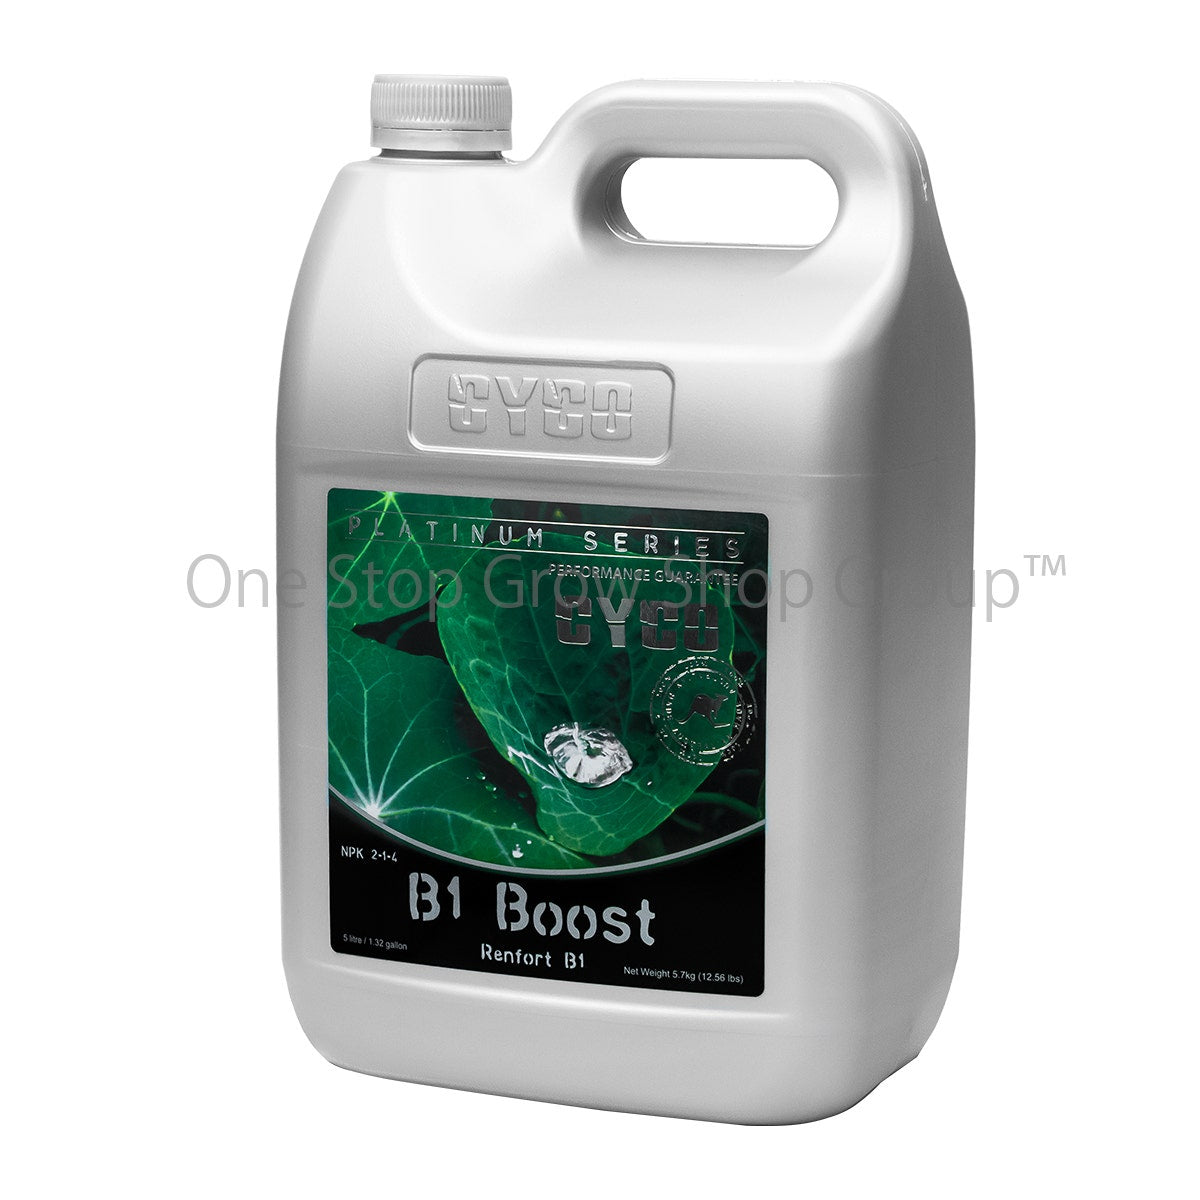 Cyco Nutrients - Platinum Series - B1 Boost